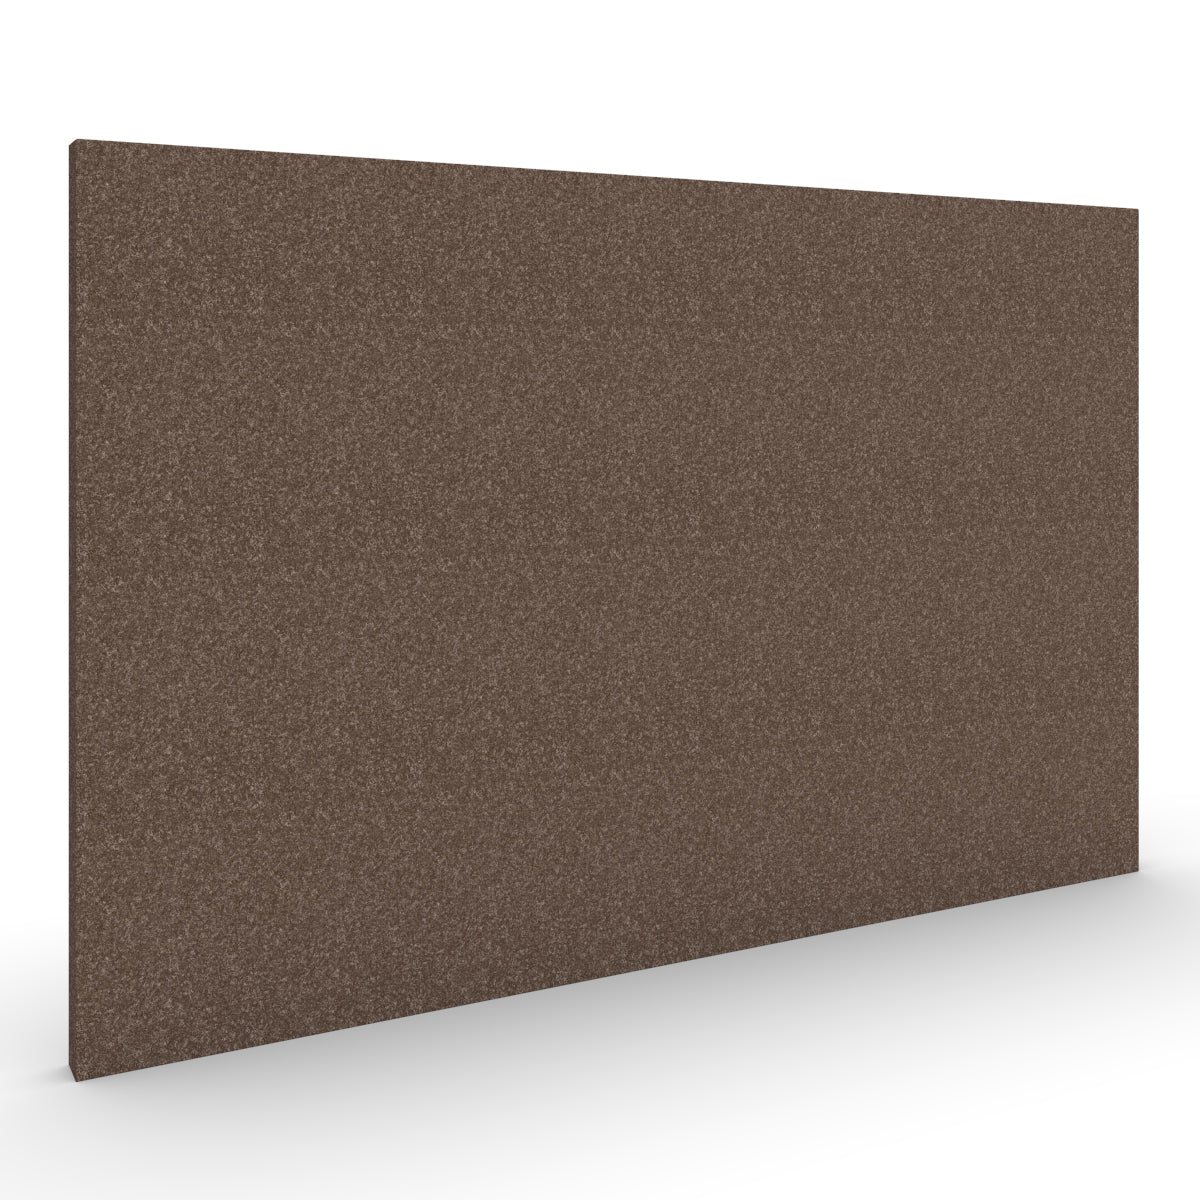 Basic wall sound absorber in brown. Size 116cmx174cm. Akustikkplater og lyddemping vegg